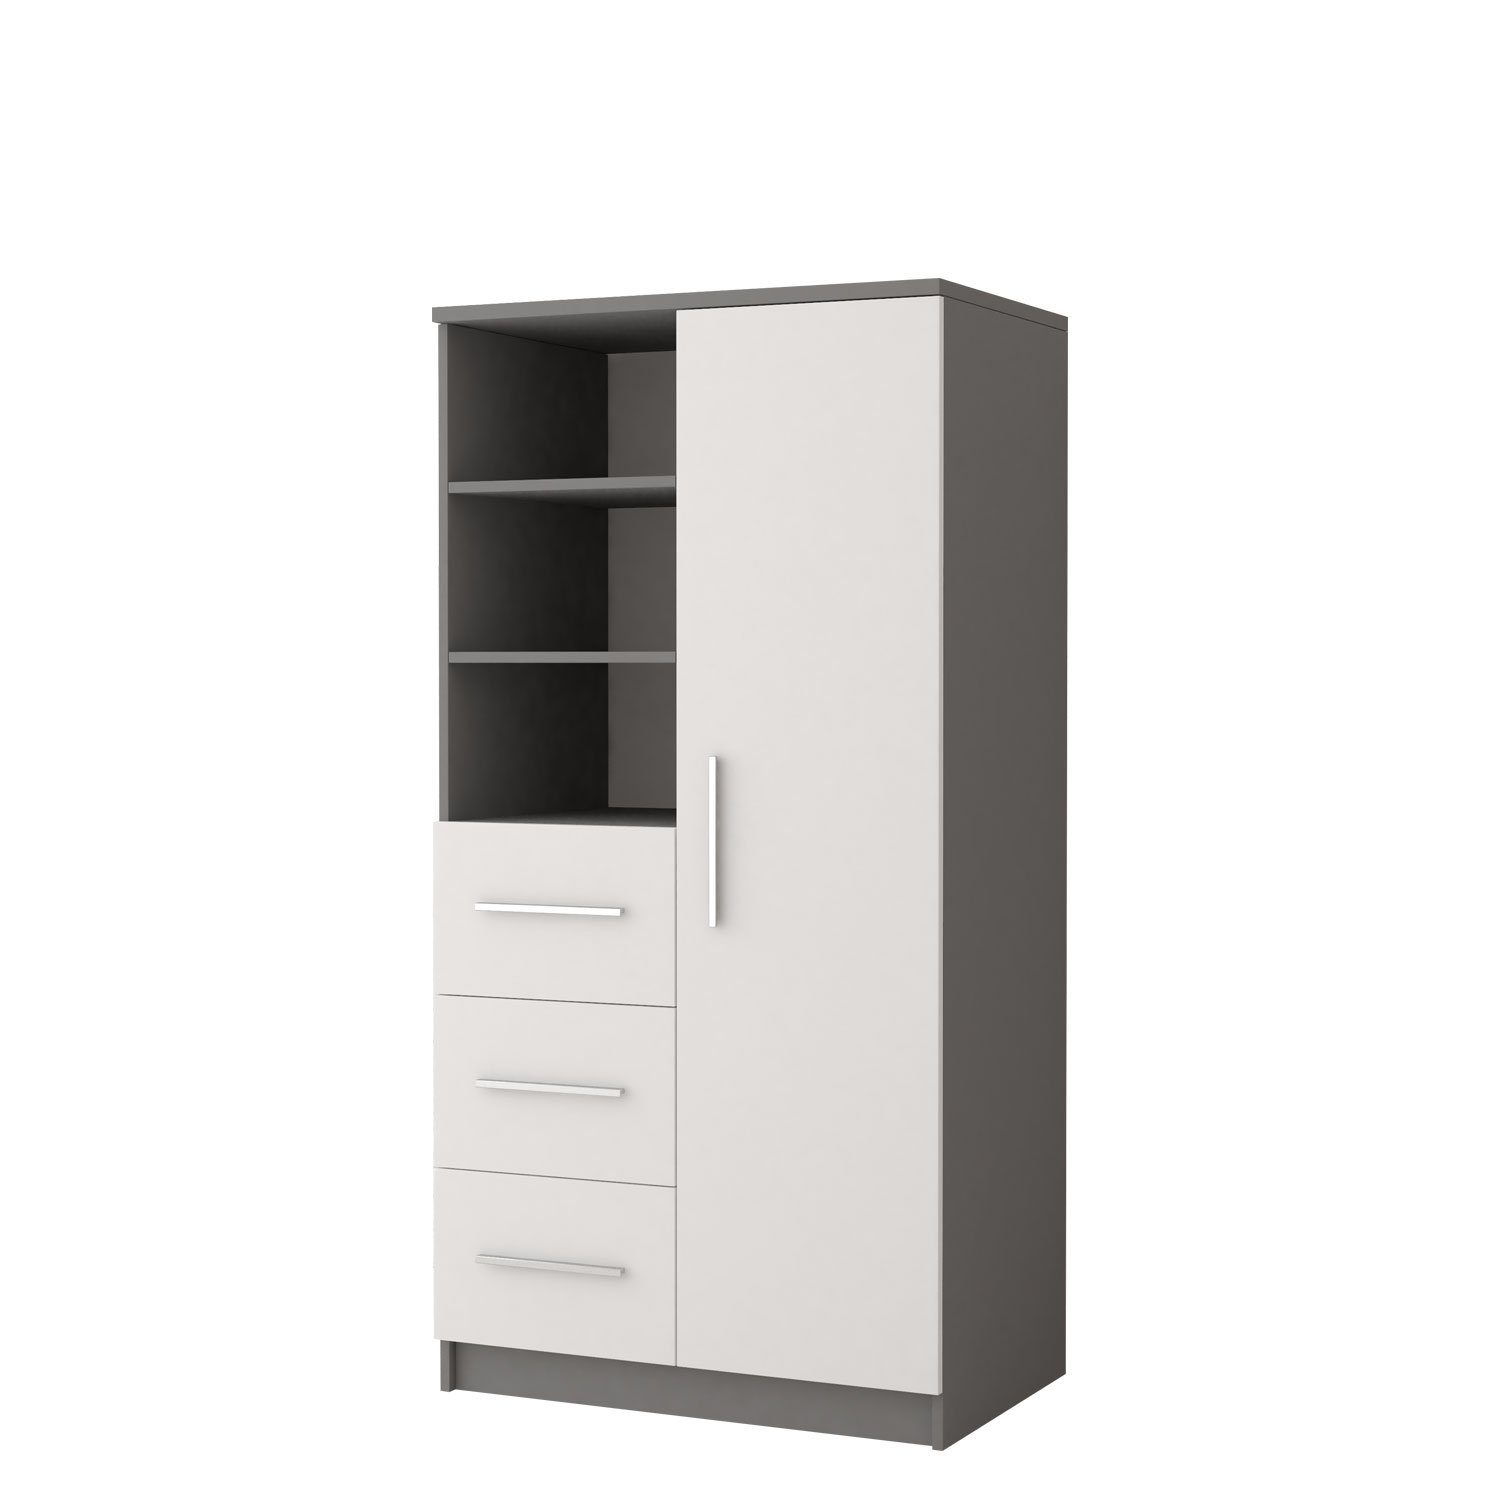 Polini Home Raumteilerregal Schrankregal 80 x 160 x 40 cm Grau-Weiß mit silbernen Griffen Colour grau-weiß-silber | Grau-weiß-silbern